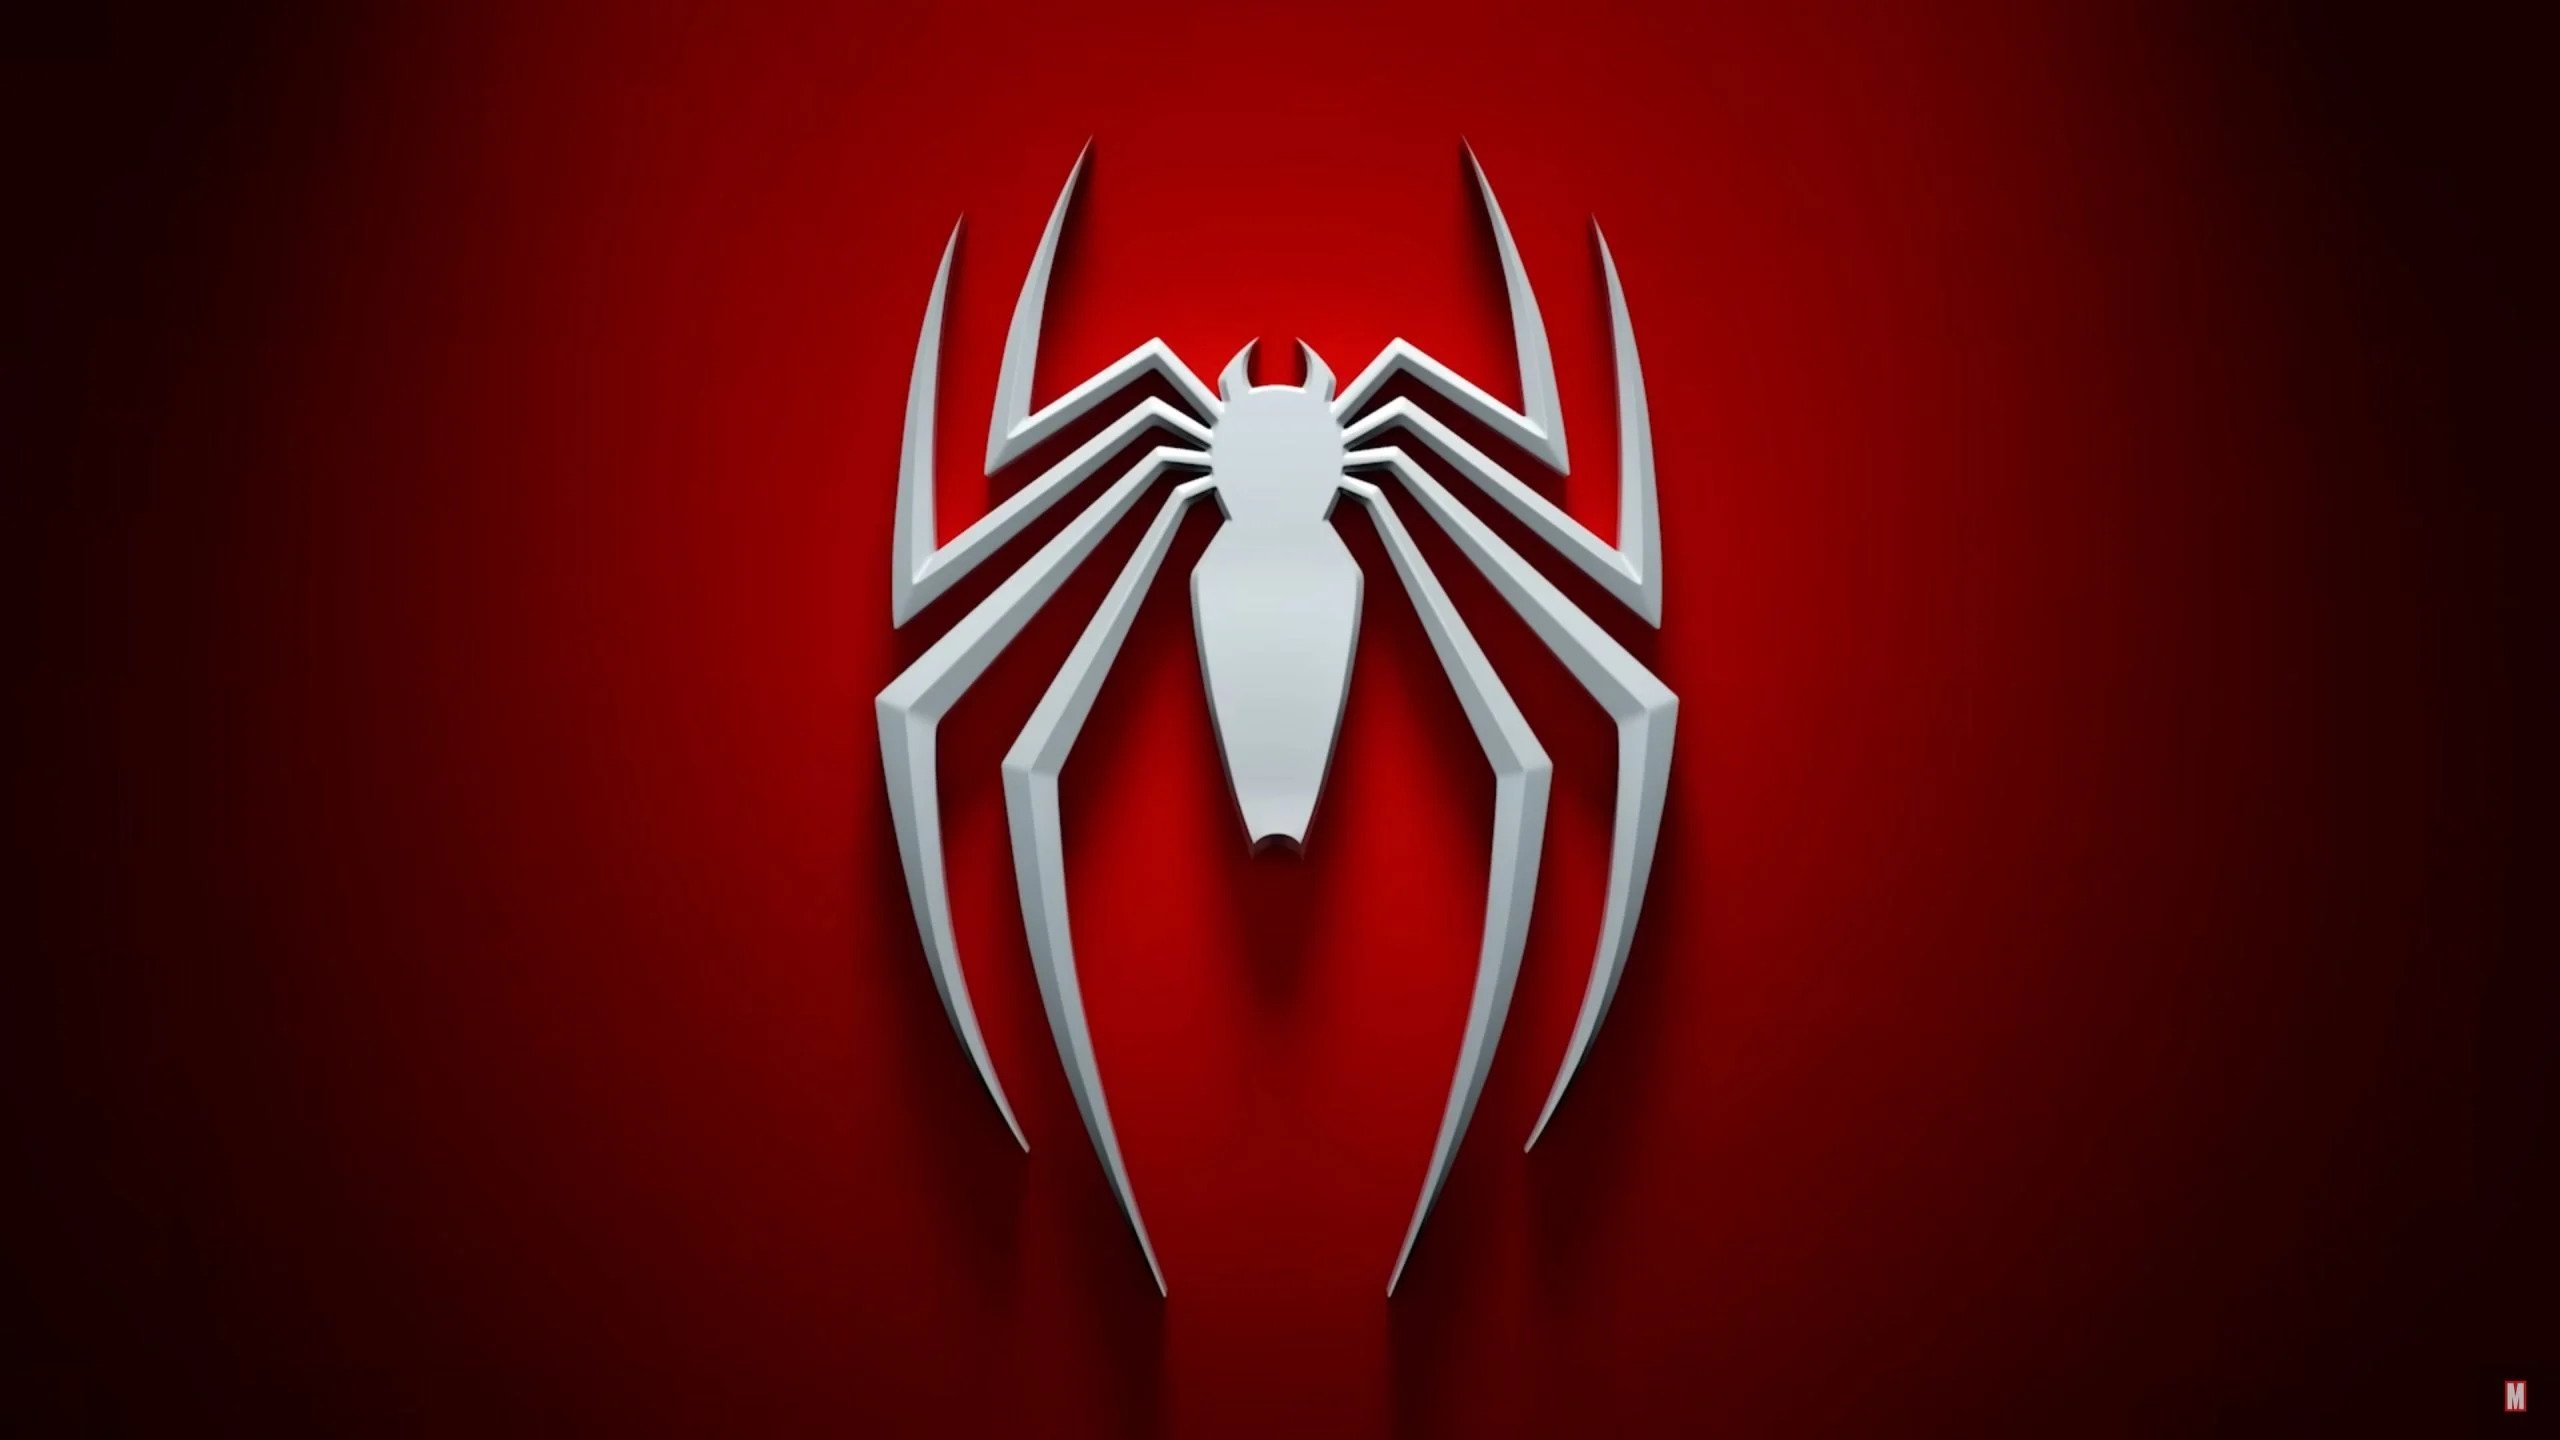 Marvel's Spider-Man 2